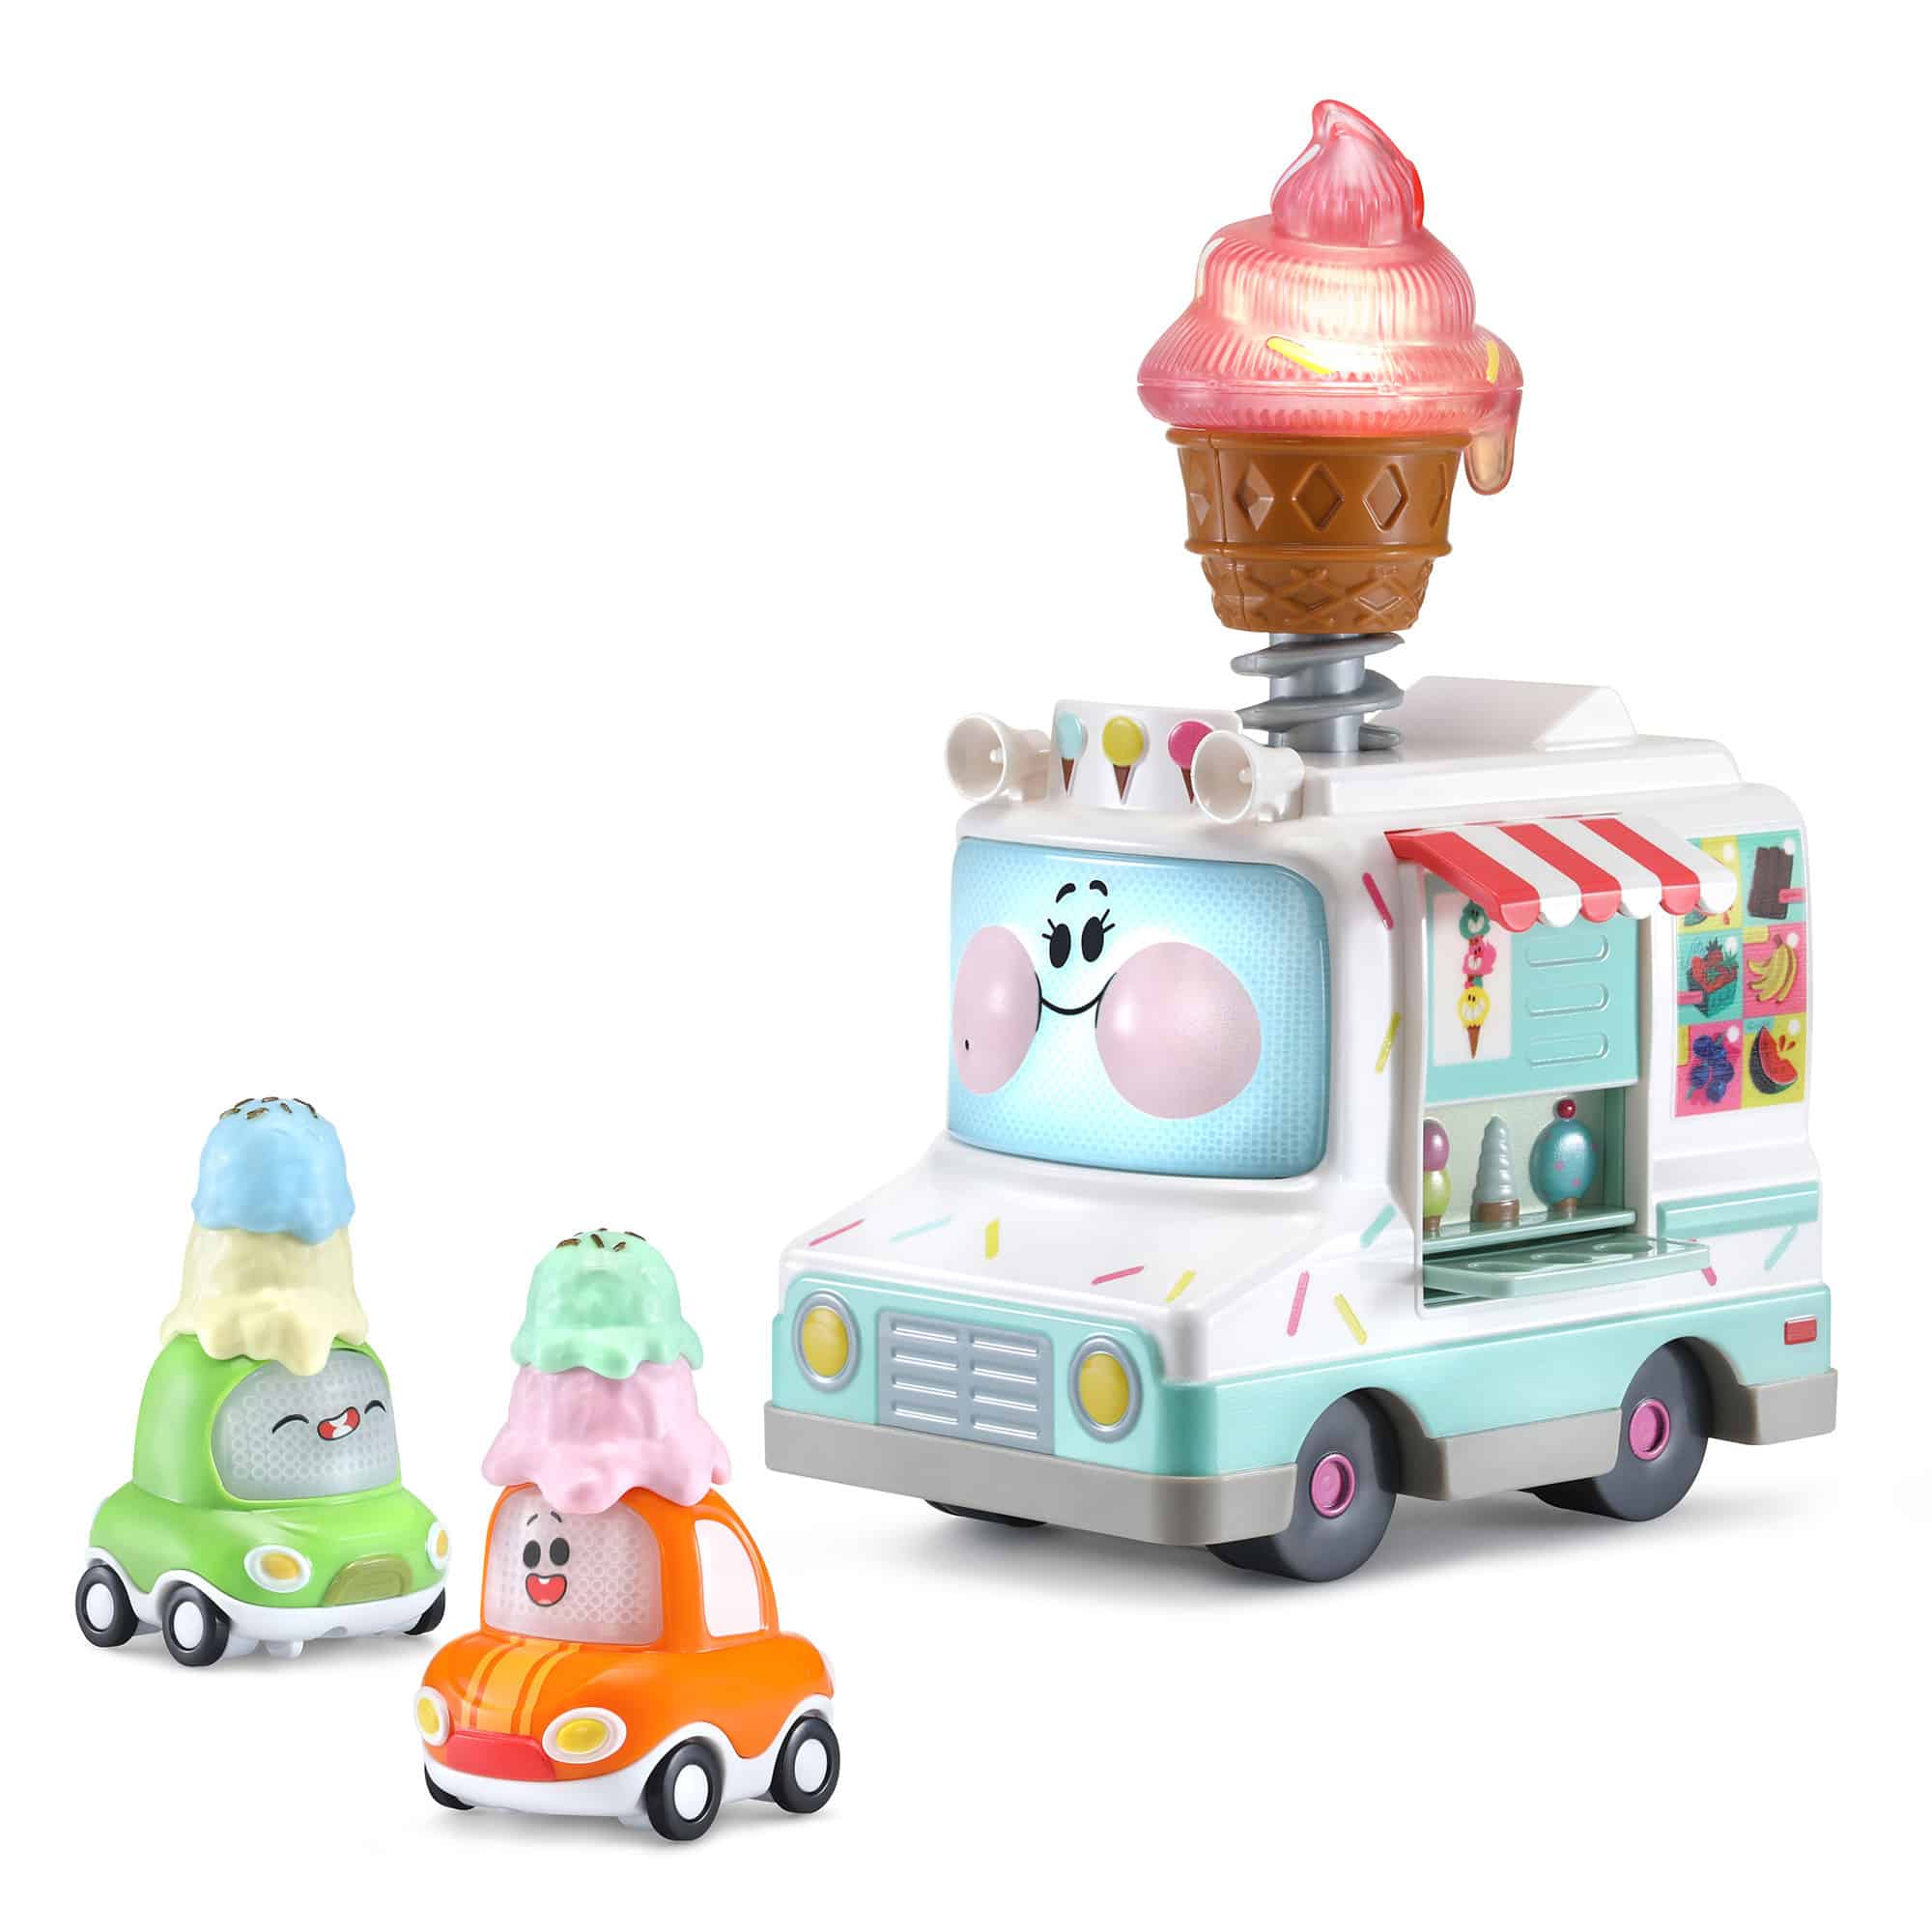 Vtech - Cory Carson - Eileen Ice Cream Van